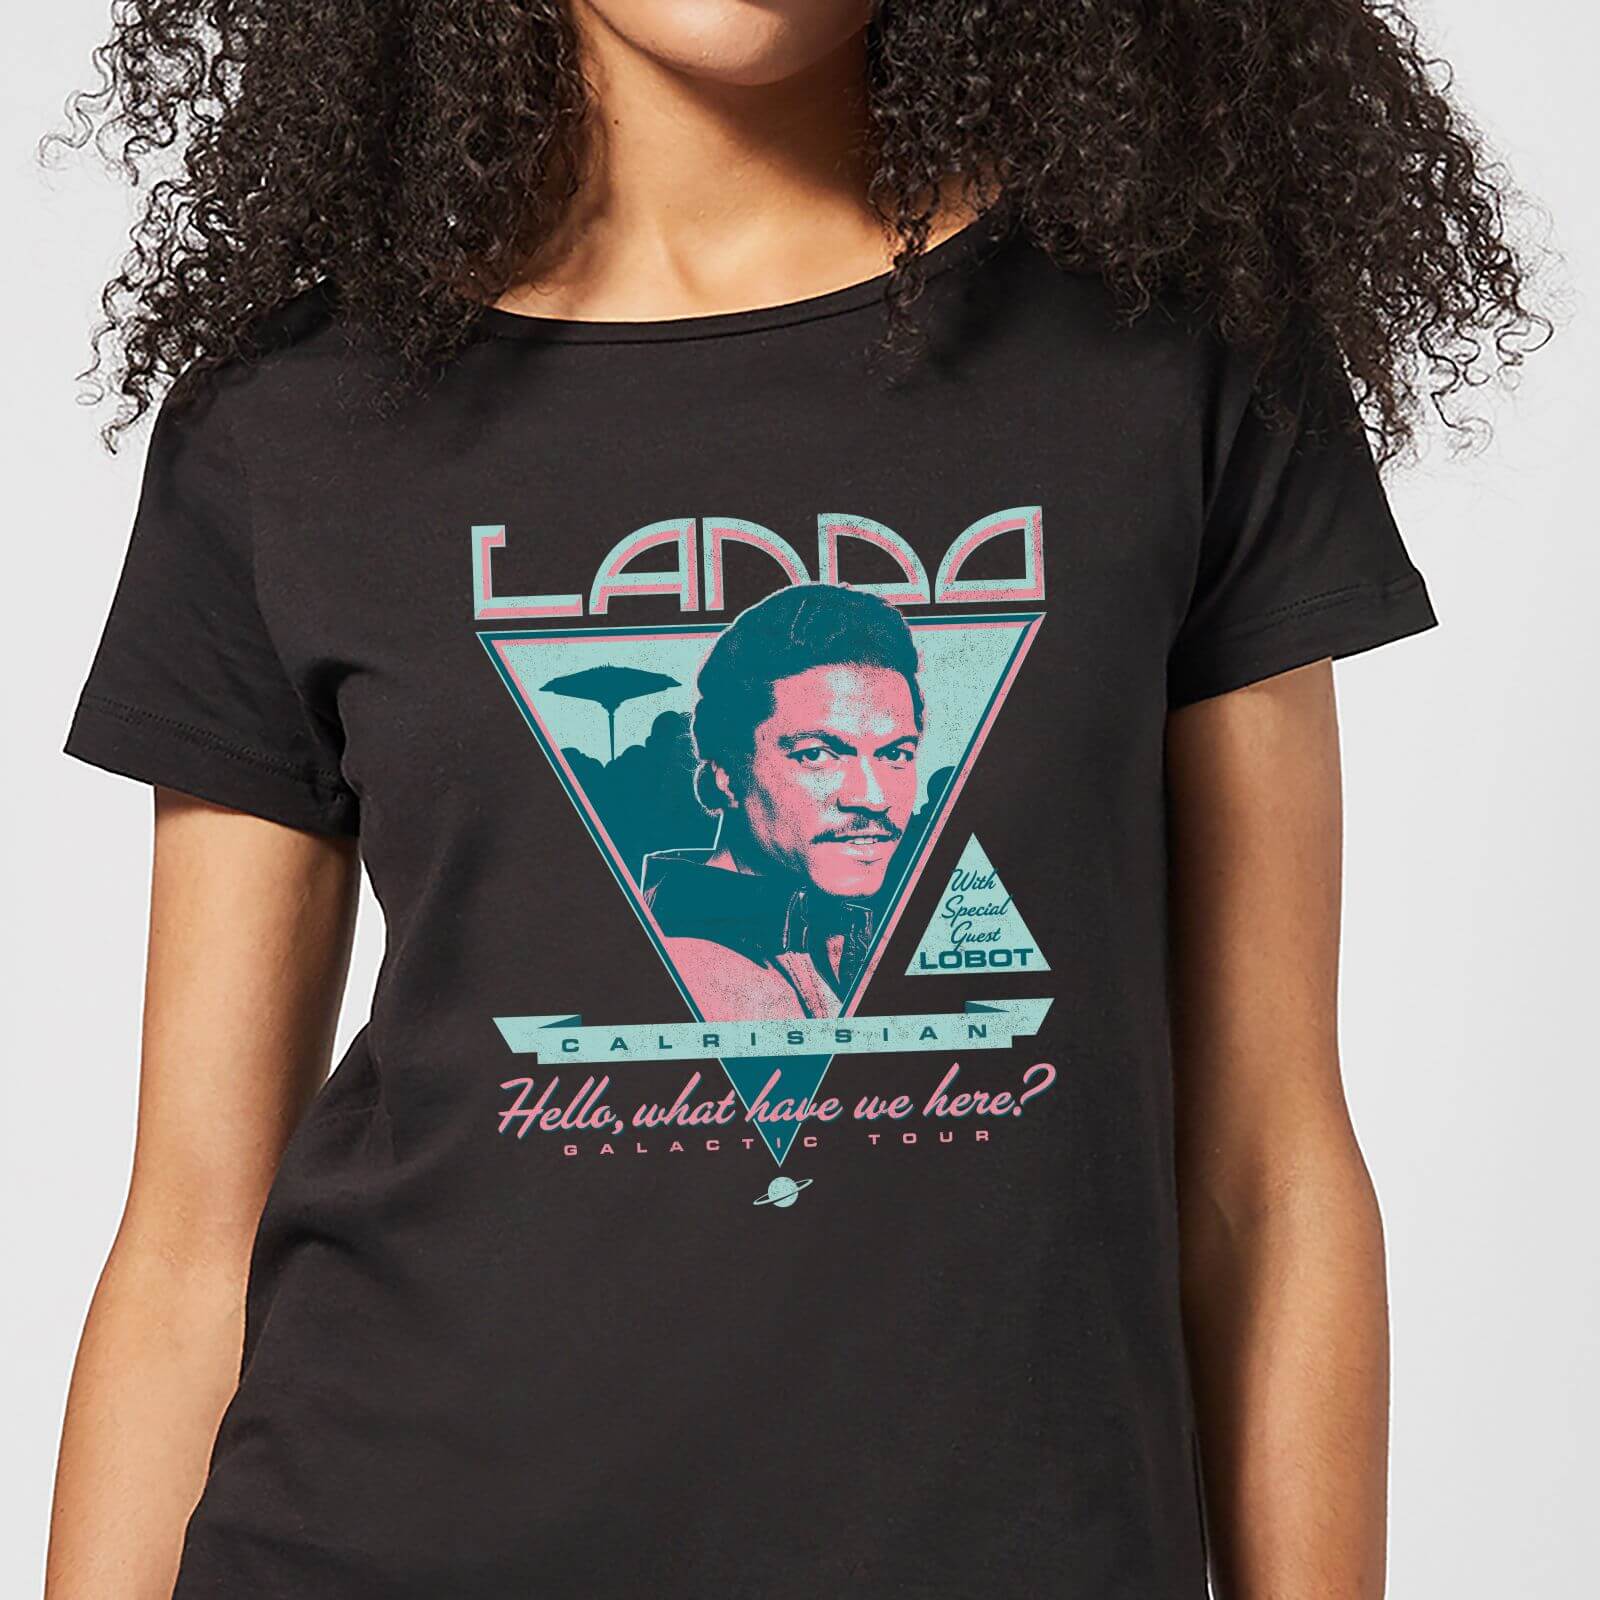 Star Wars Lando Rock Poster Women's T-Shirt - Black - XL - Black